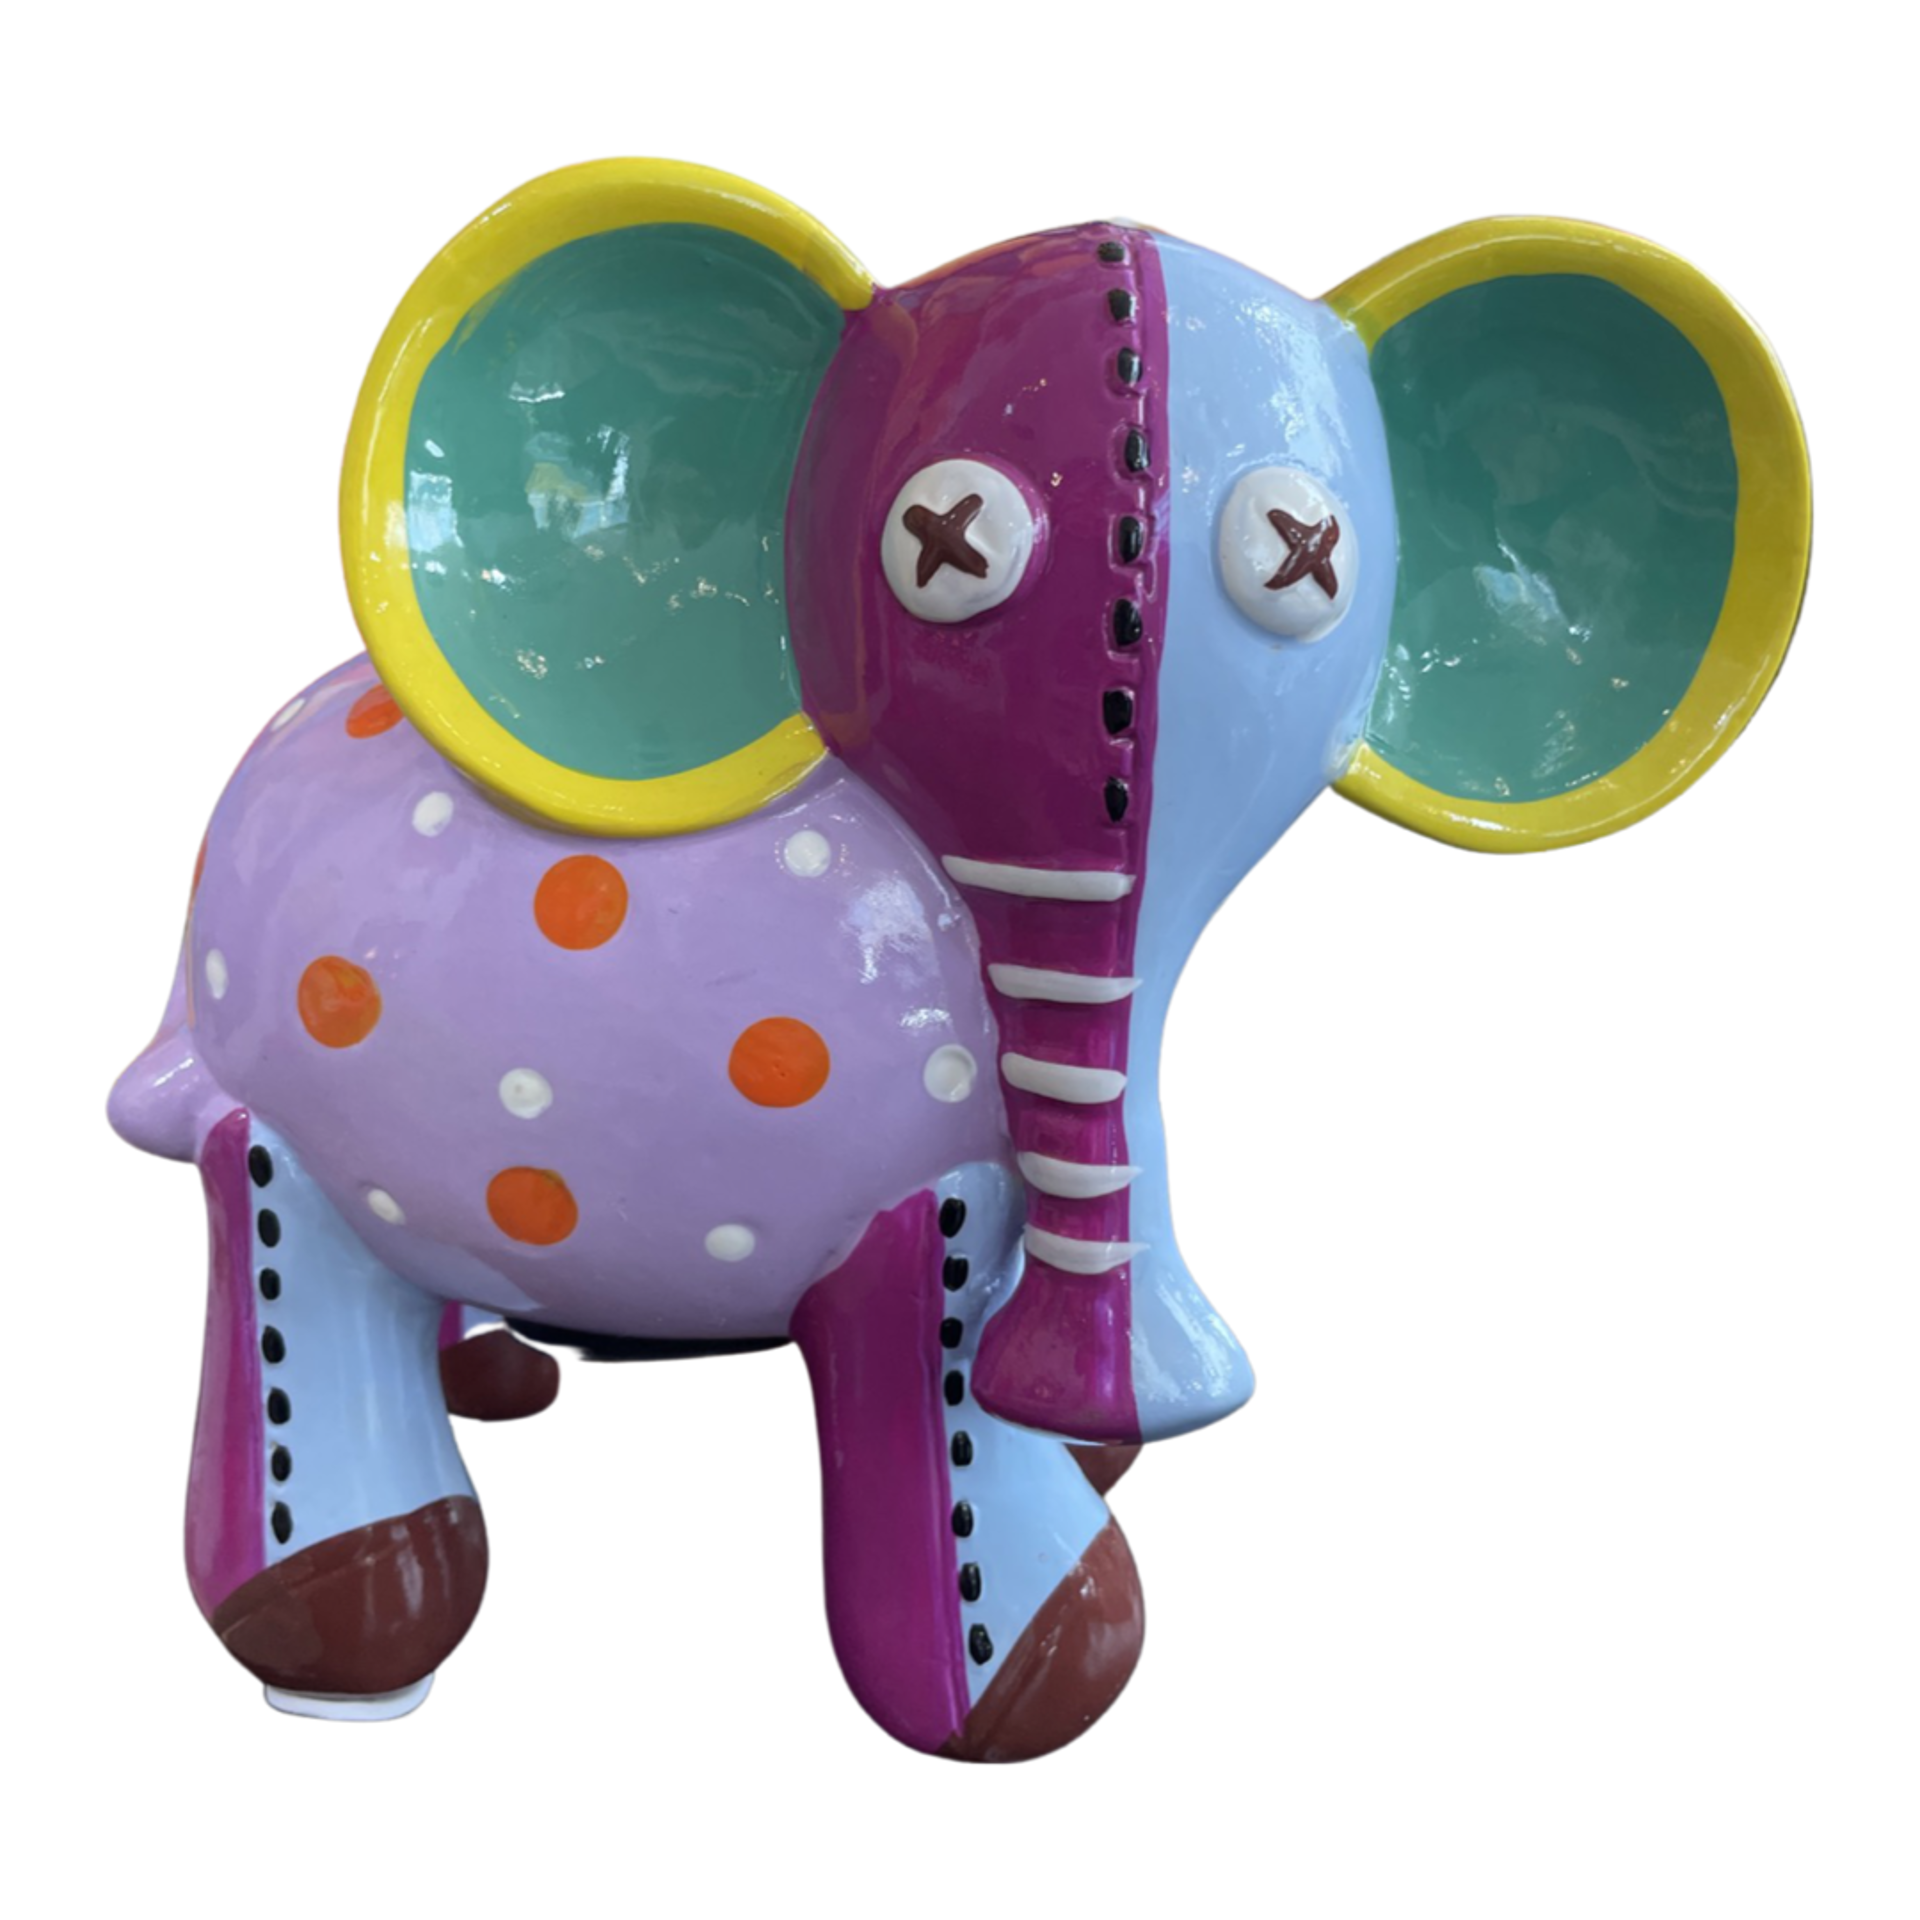 Toy Collection “Elephant Piggy Bank” by EBFA Studio